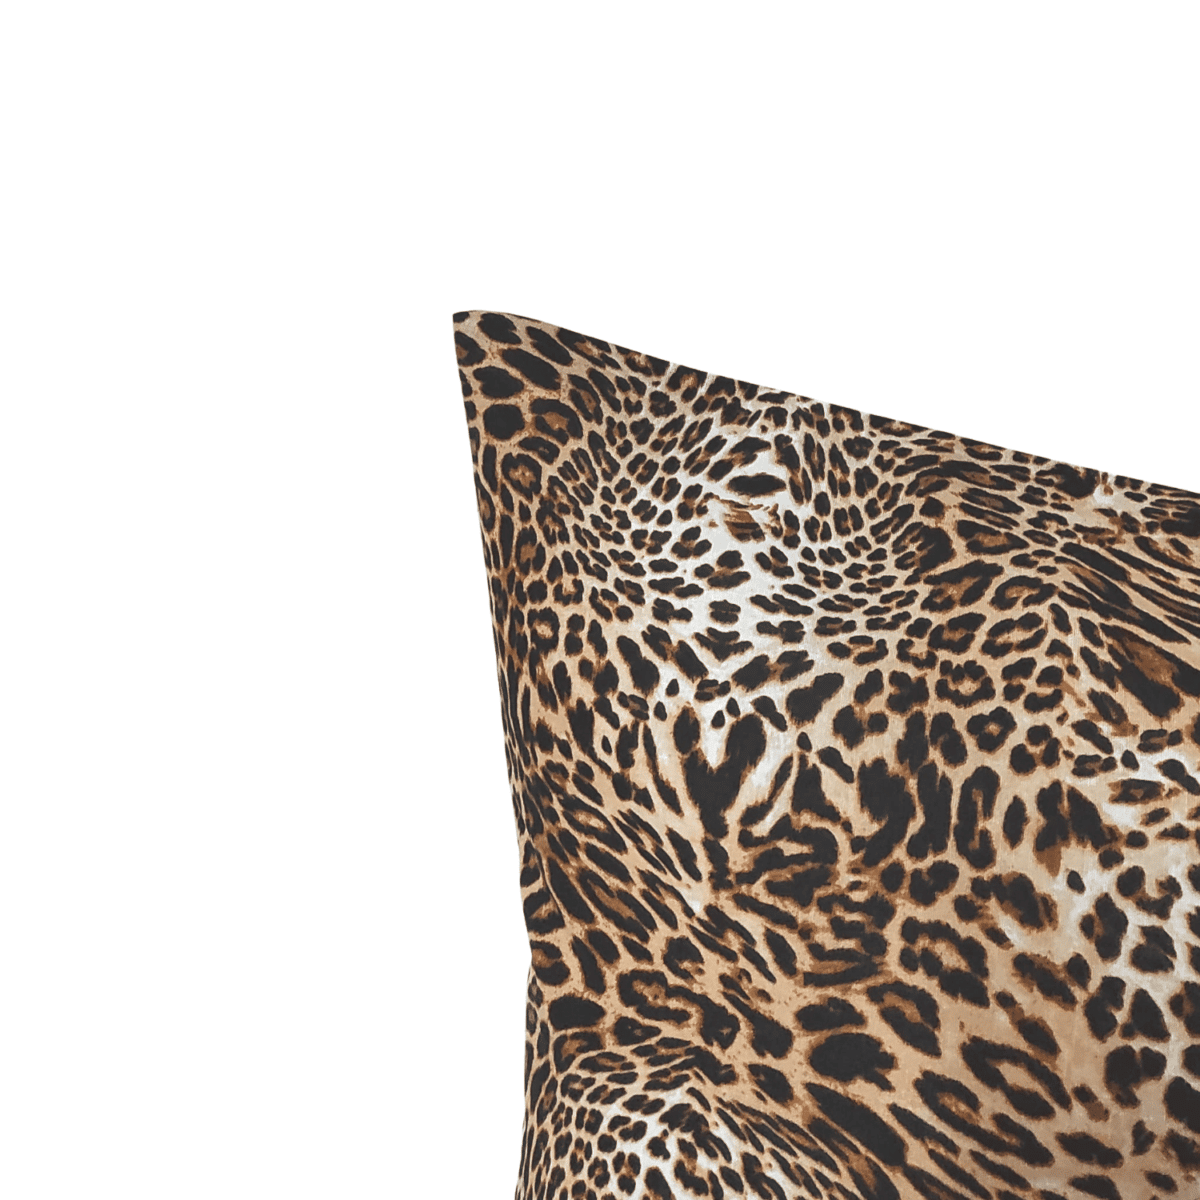 completo-lenzuola-leopardo-penelope-leopardato-animalier-beige-crema-panna-marrone-bianco-dettaglio-federa